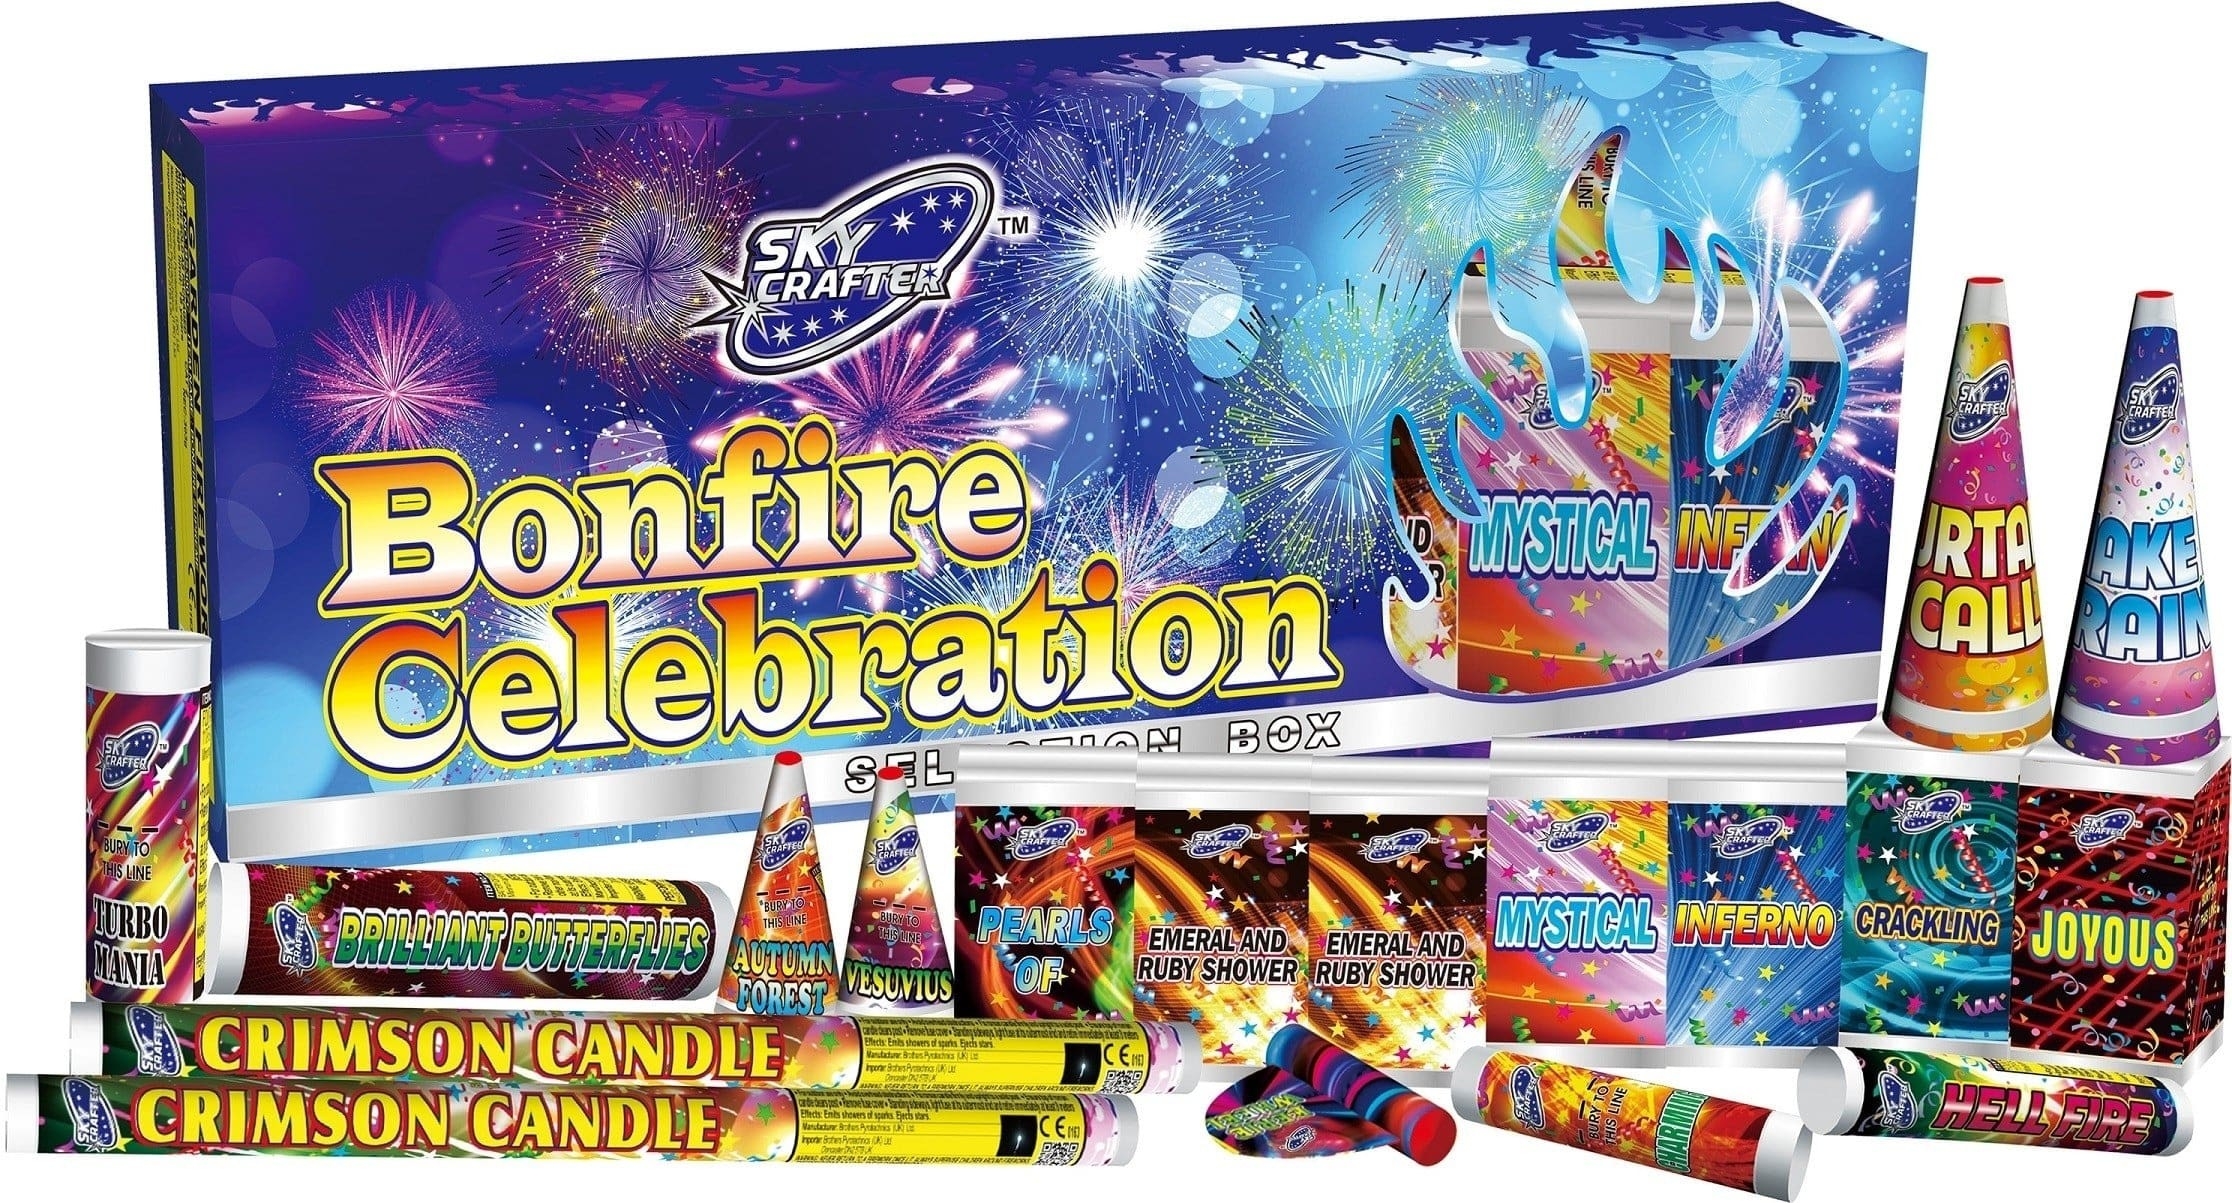 Bonfire Celebration Selection Box available at Fireworks Kingdom